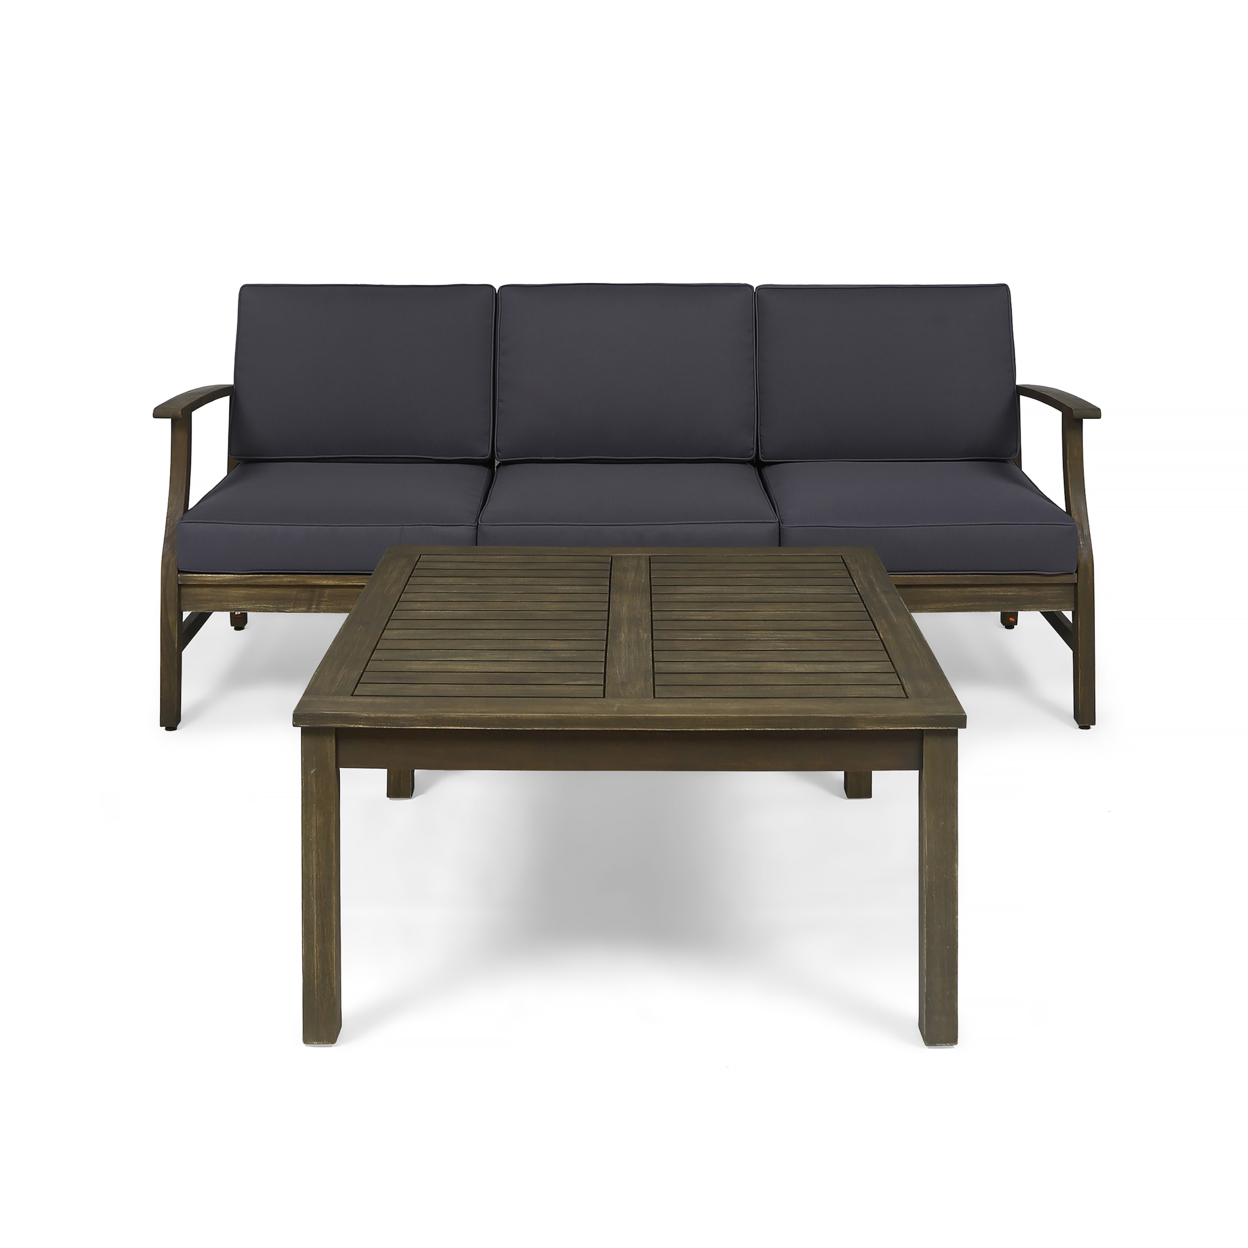 Lorelei Outdoor 4 Piece Acacia Wood Sofa And Coffee Table Set - Gray Finish + Dark Gray